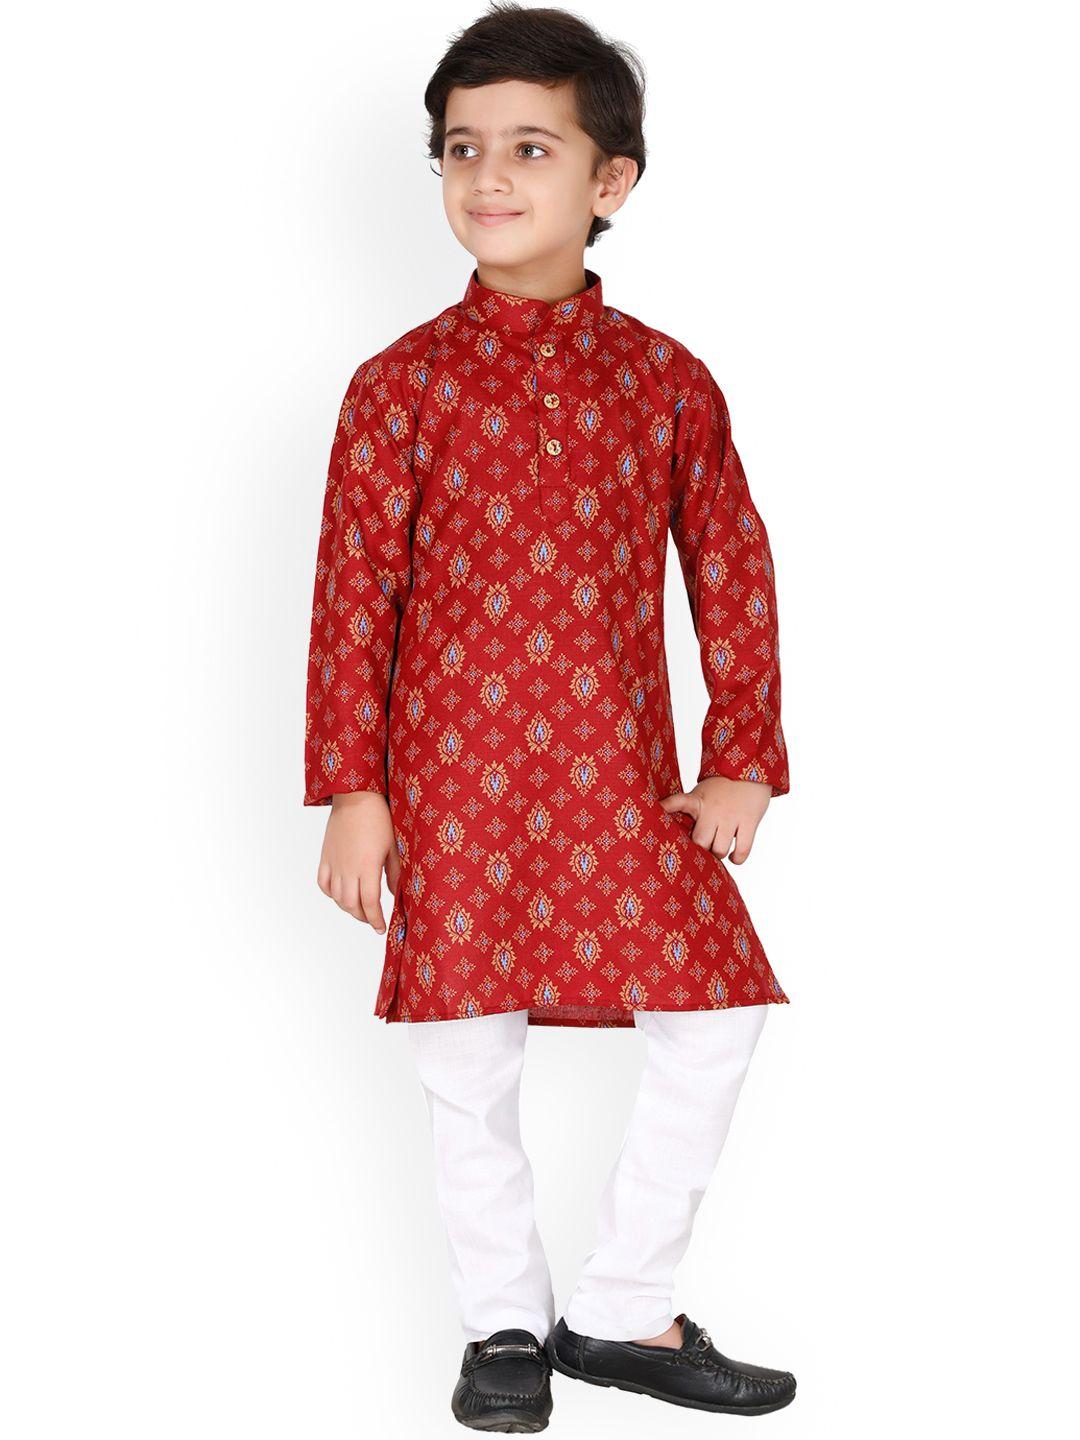 fourfolds boys red & white ethnic motifs printed cotton blend kurta set